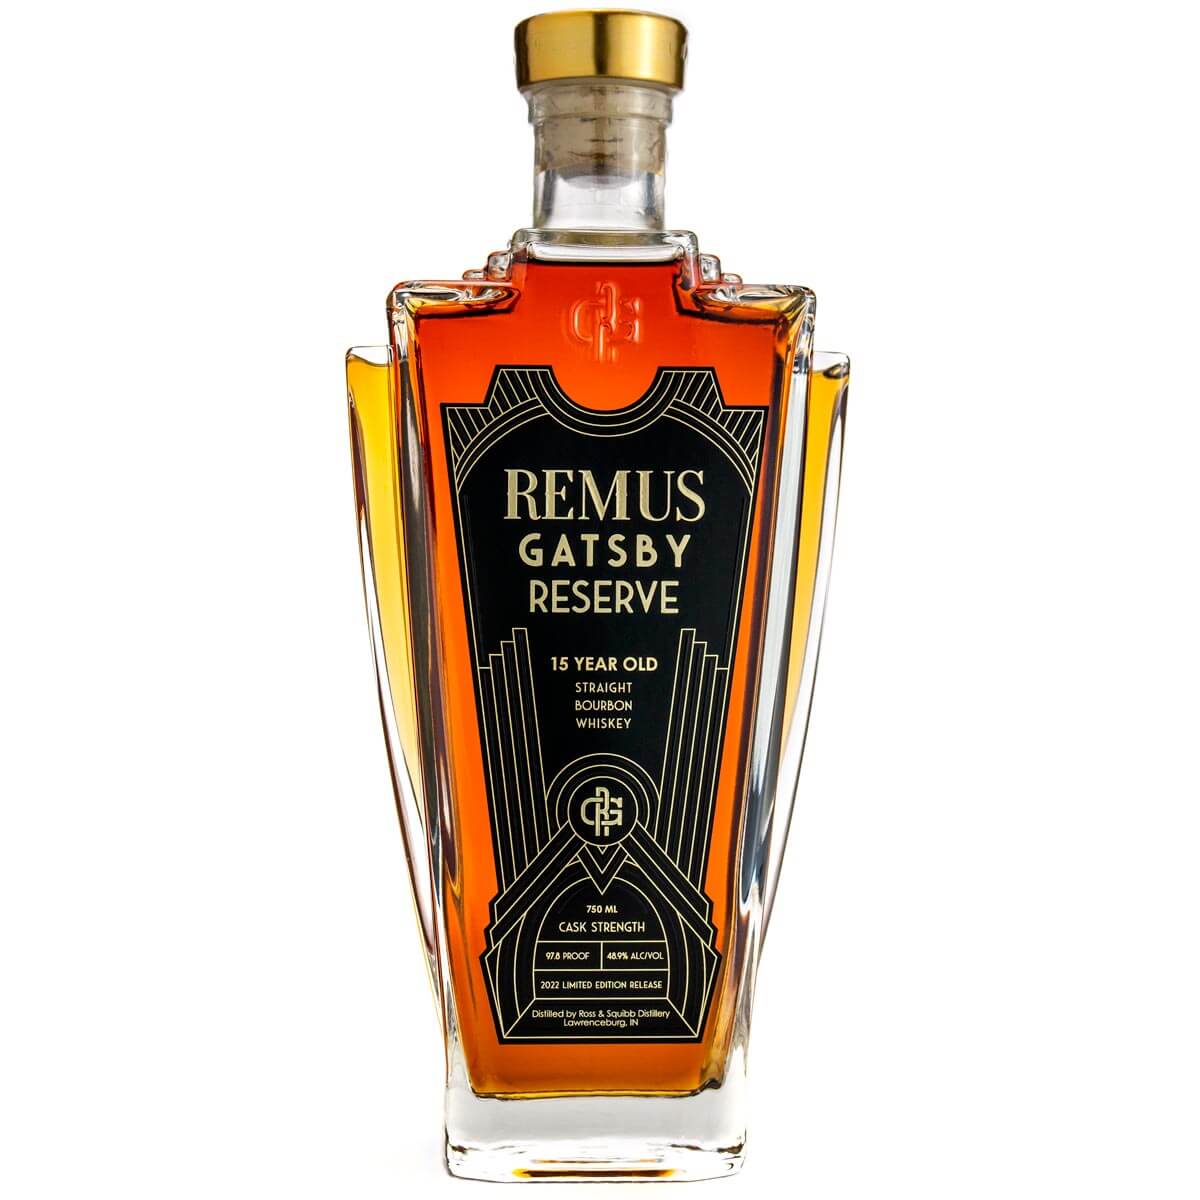 Remus Gatsby Reserve bottle